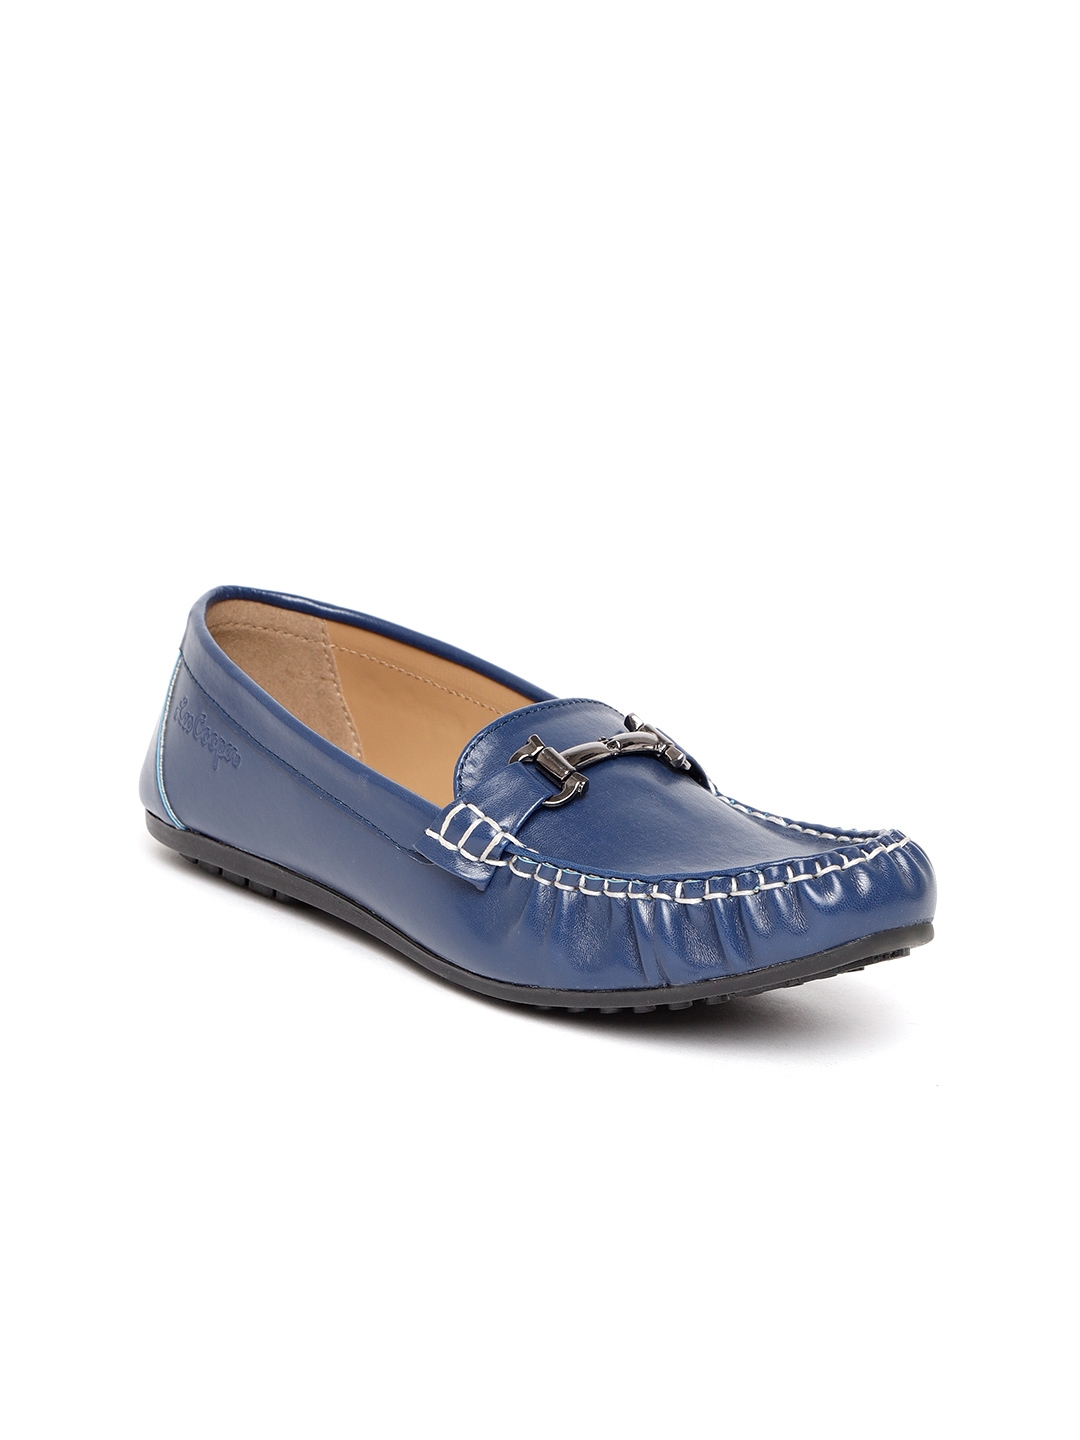 lee cooper loafers blue